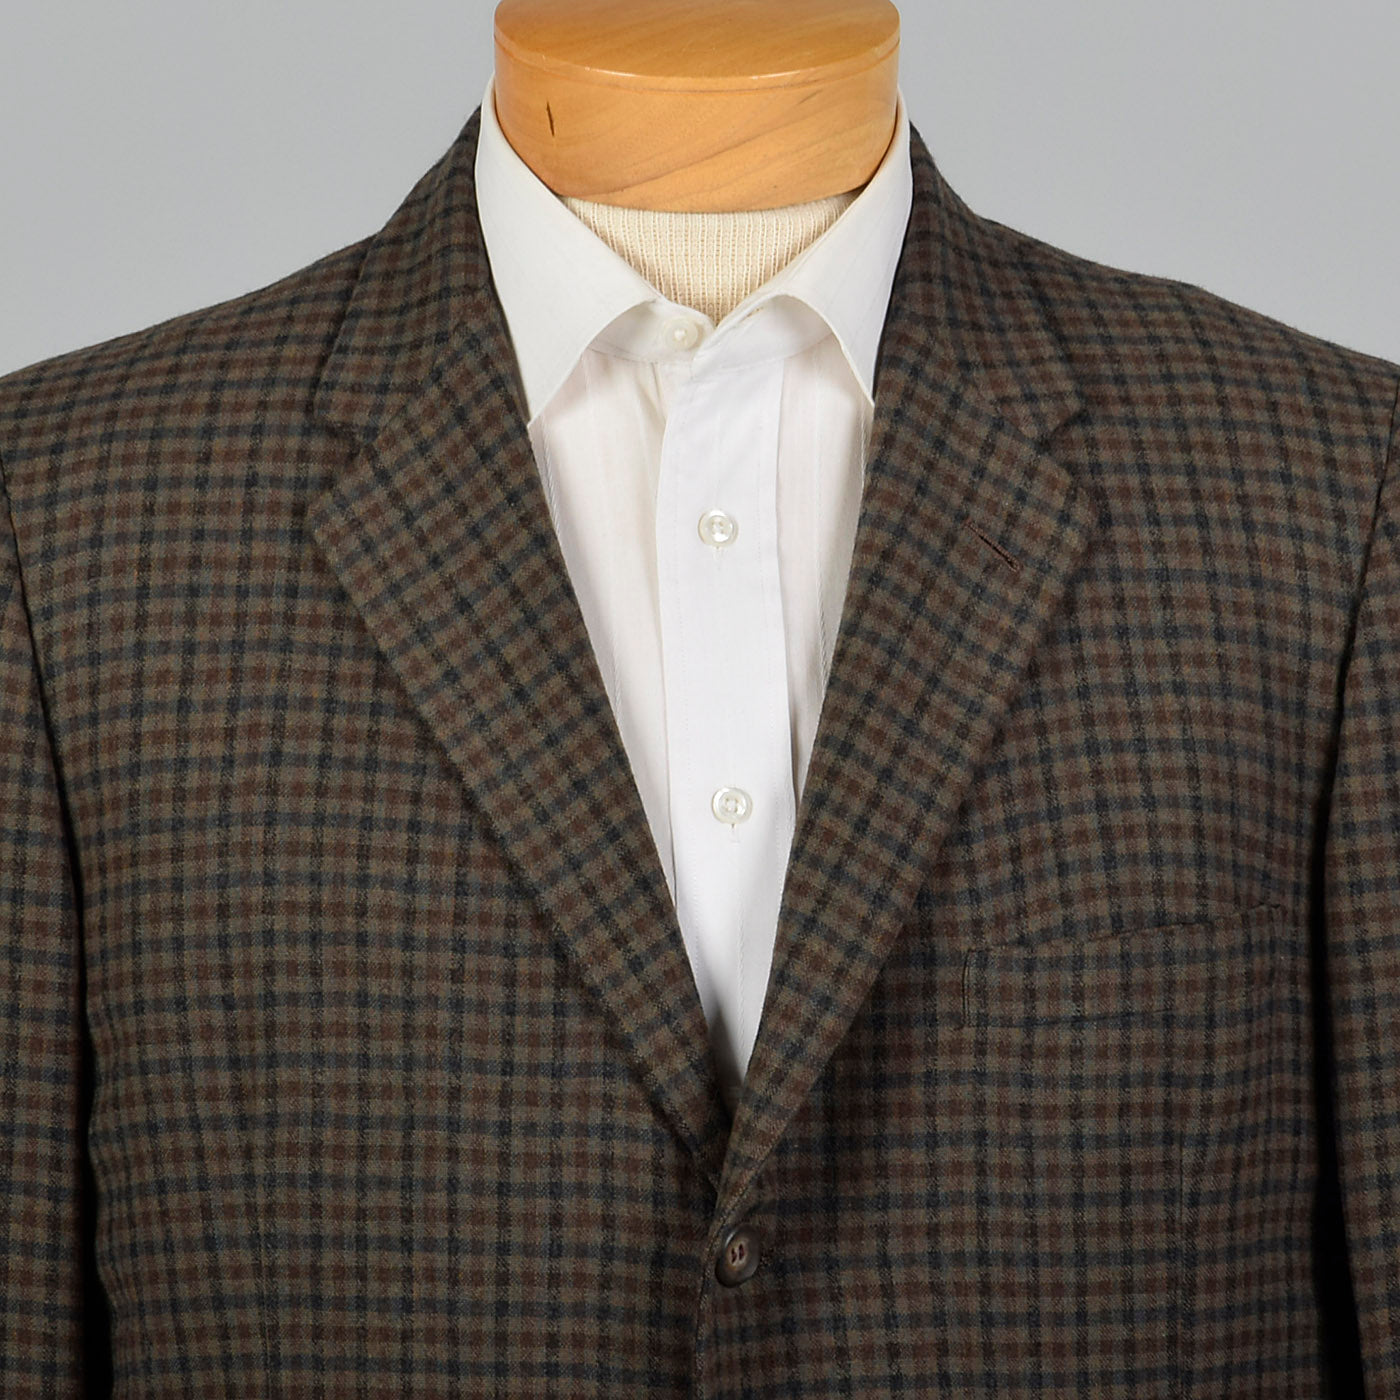 1950s Mens Brown Check Wool Jacket